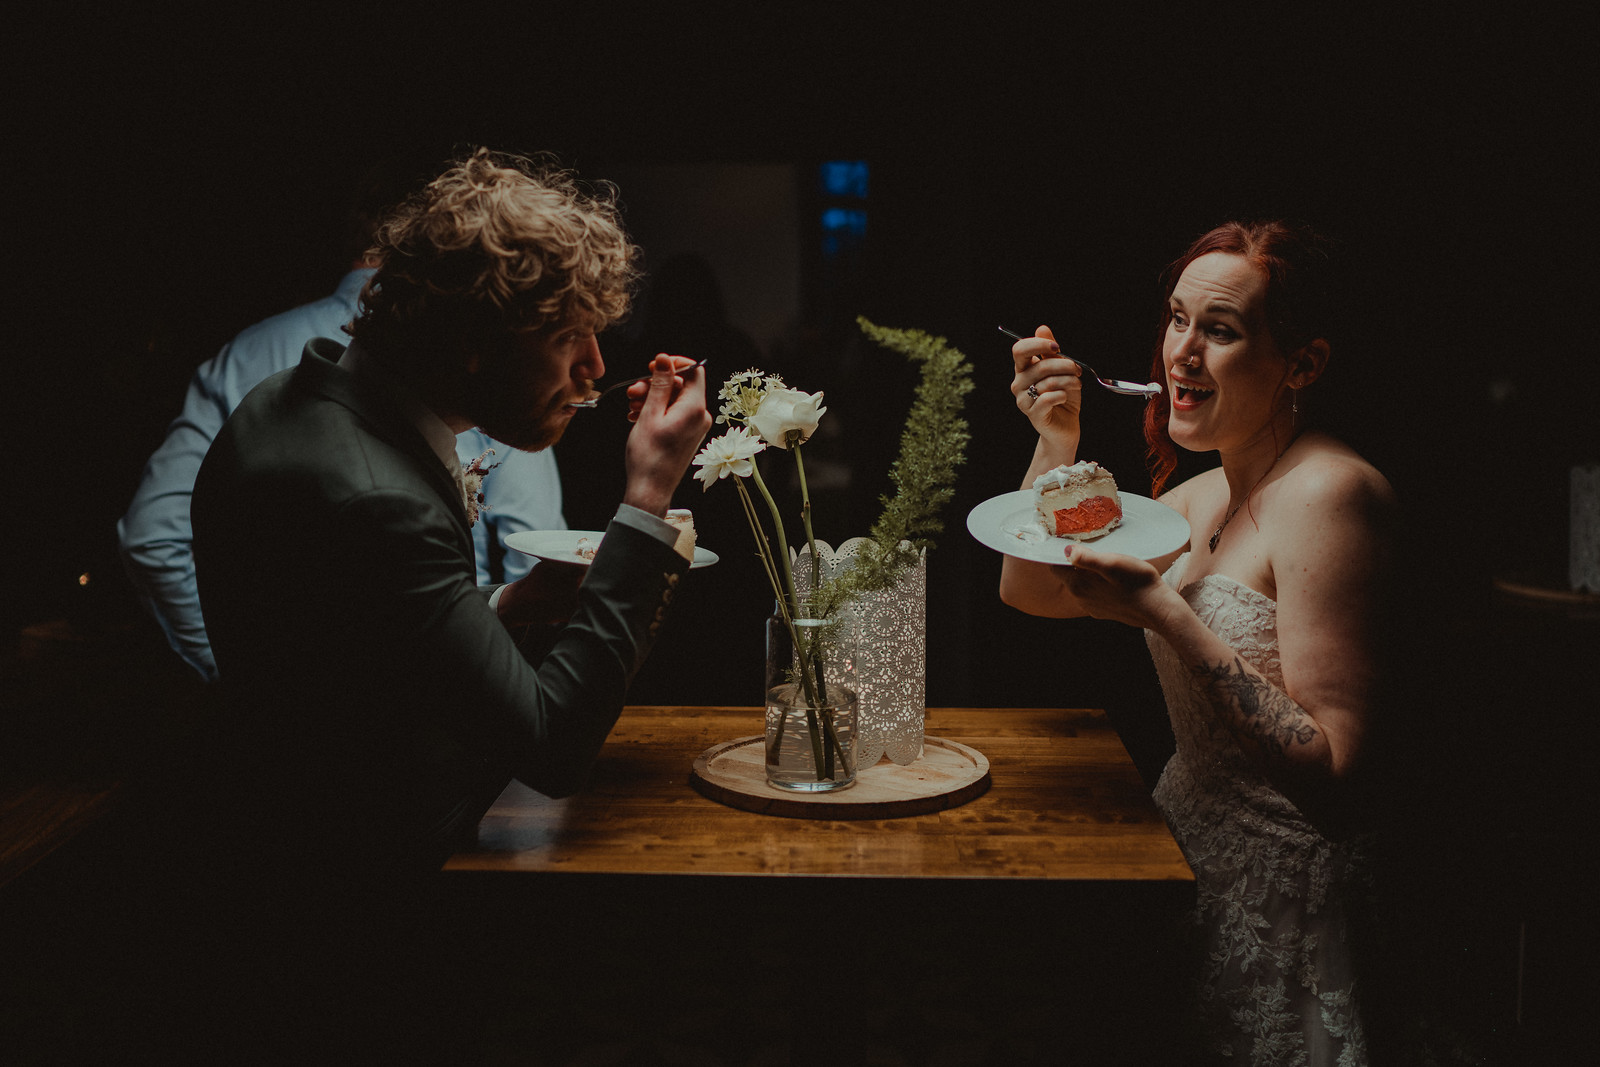 Bride and groom eating cake together